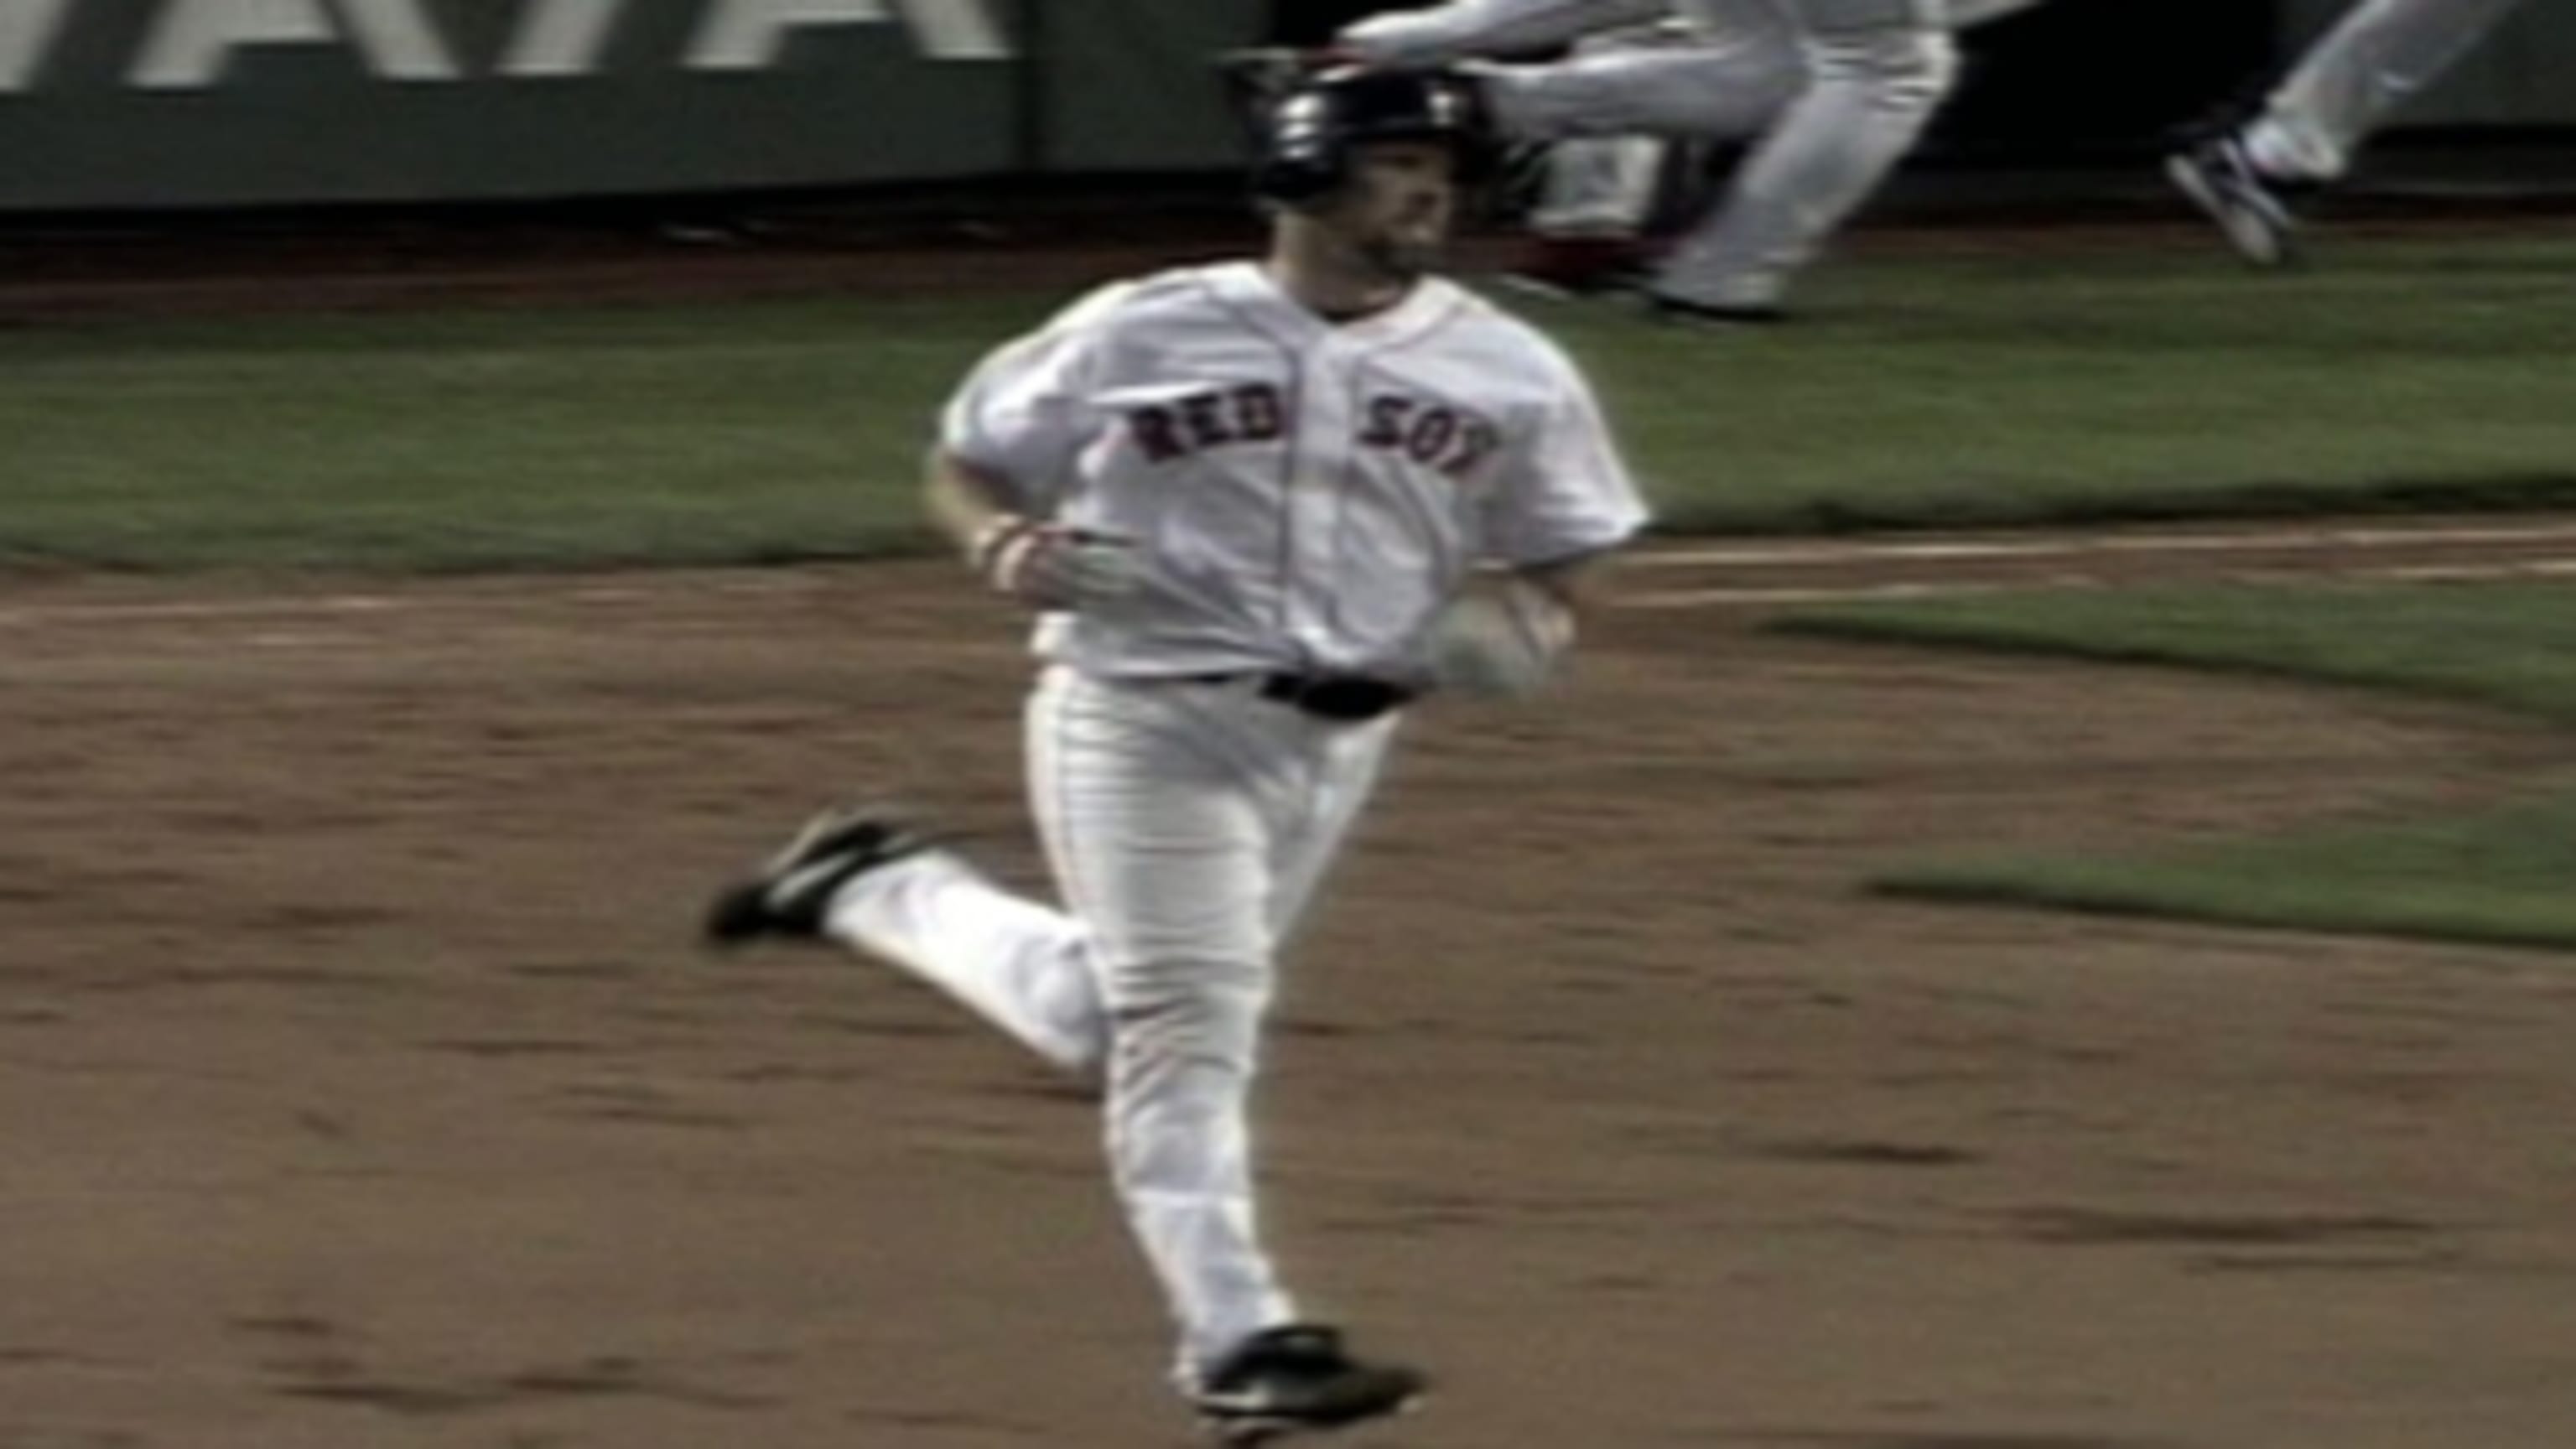 Classic seasons: 2004 Red Sox